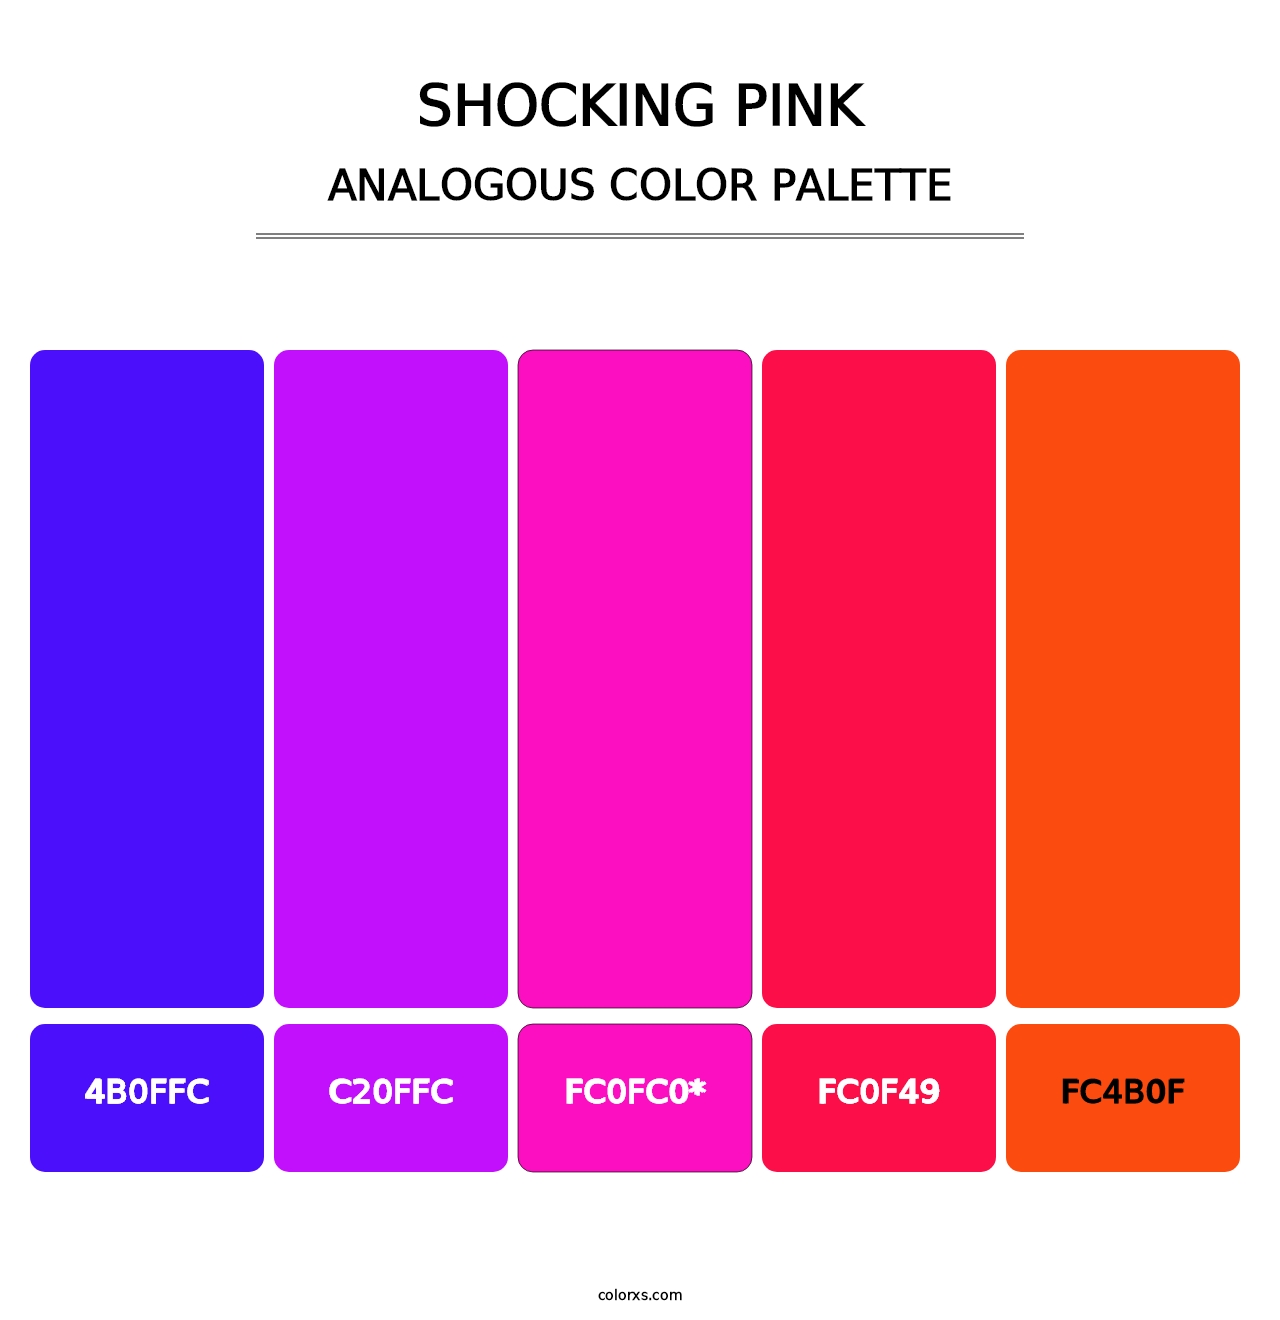 Shocking Pink - Analogous Color Palette